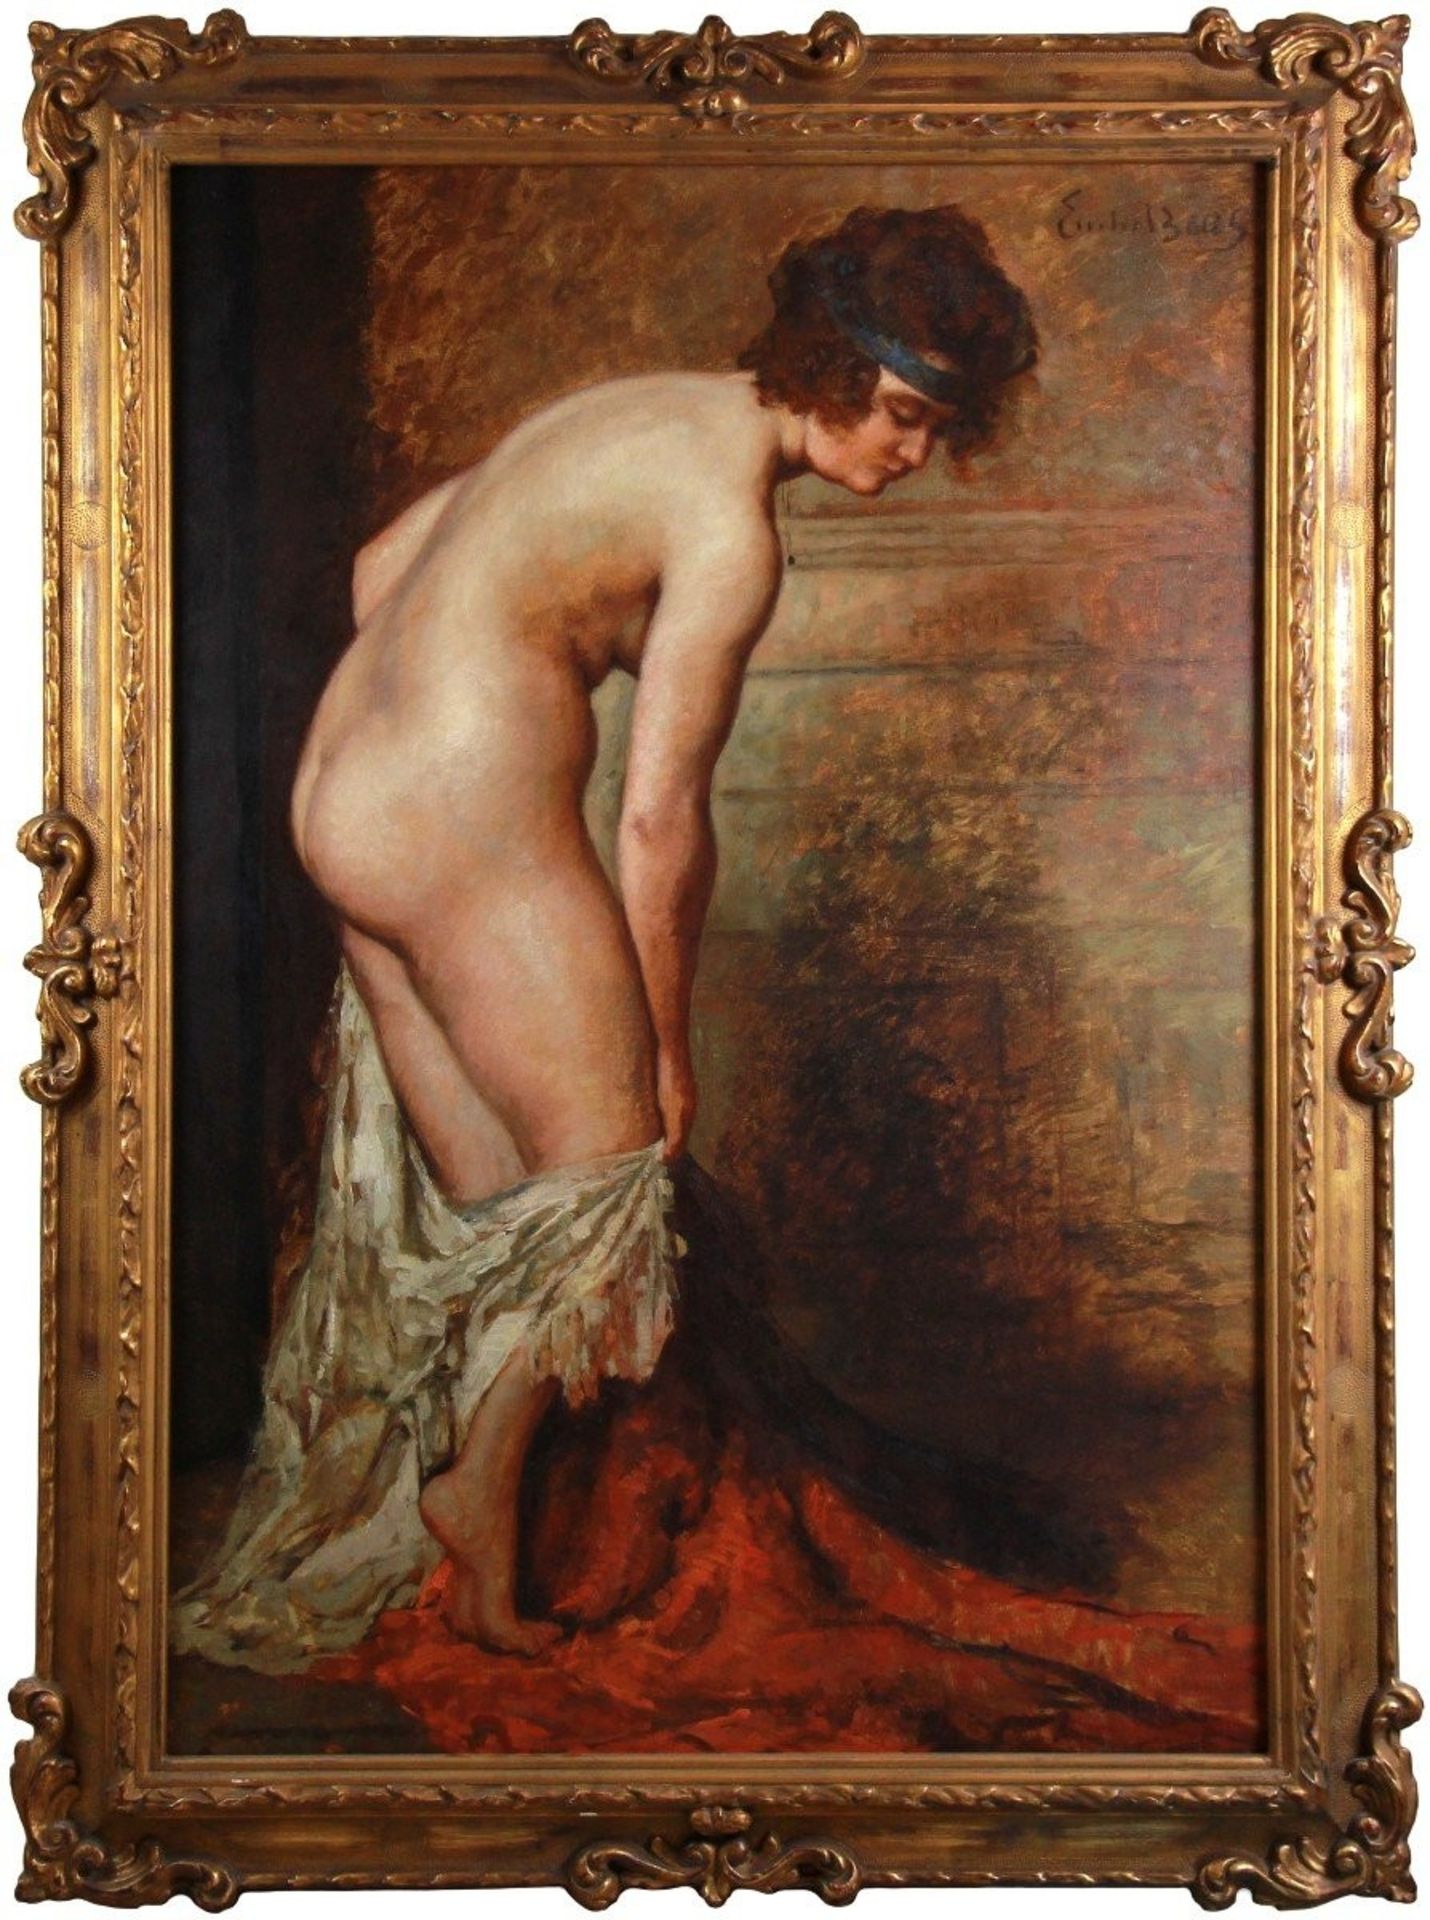 Emile Baes (1879-1954), female nude, oil on canvas, 90 x 130 cm